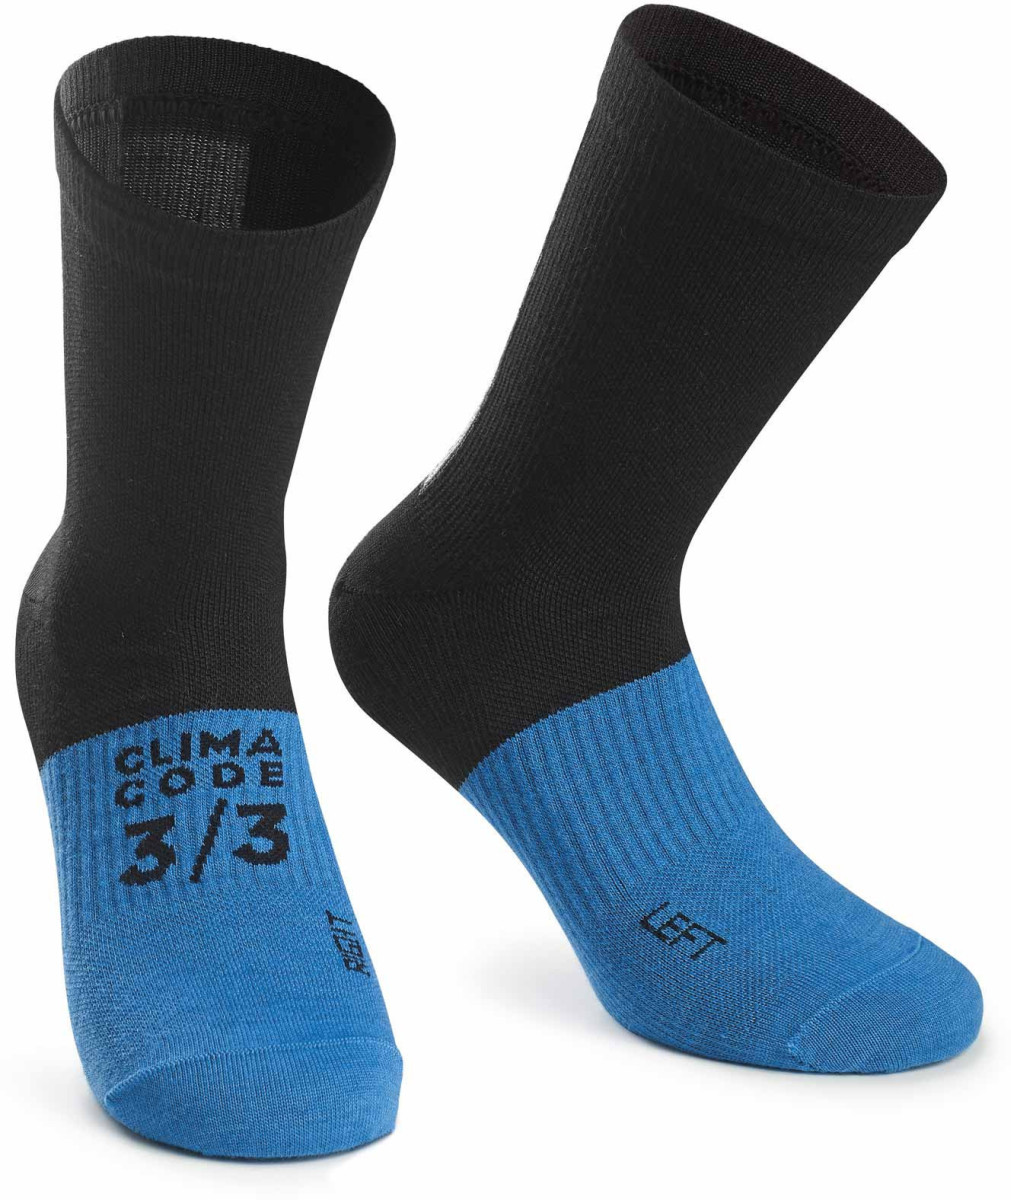 Assos Ultraz Winter Socks - Socks - Cycle SuperStore